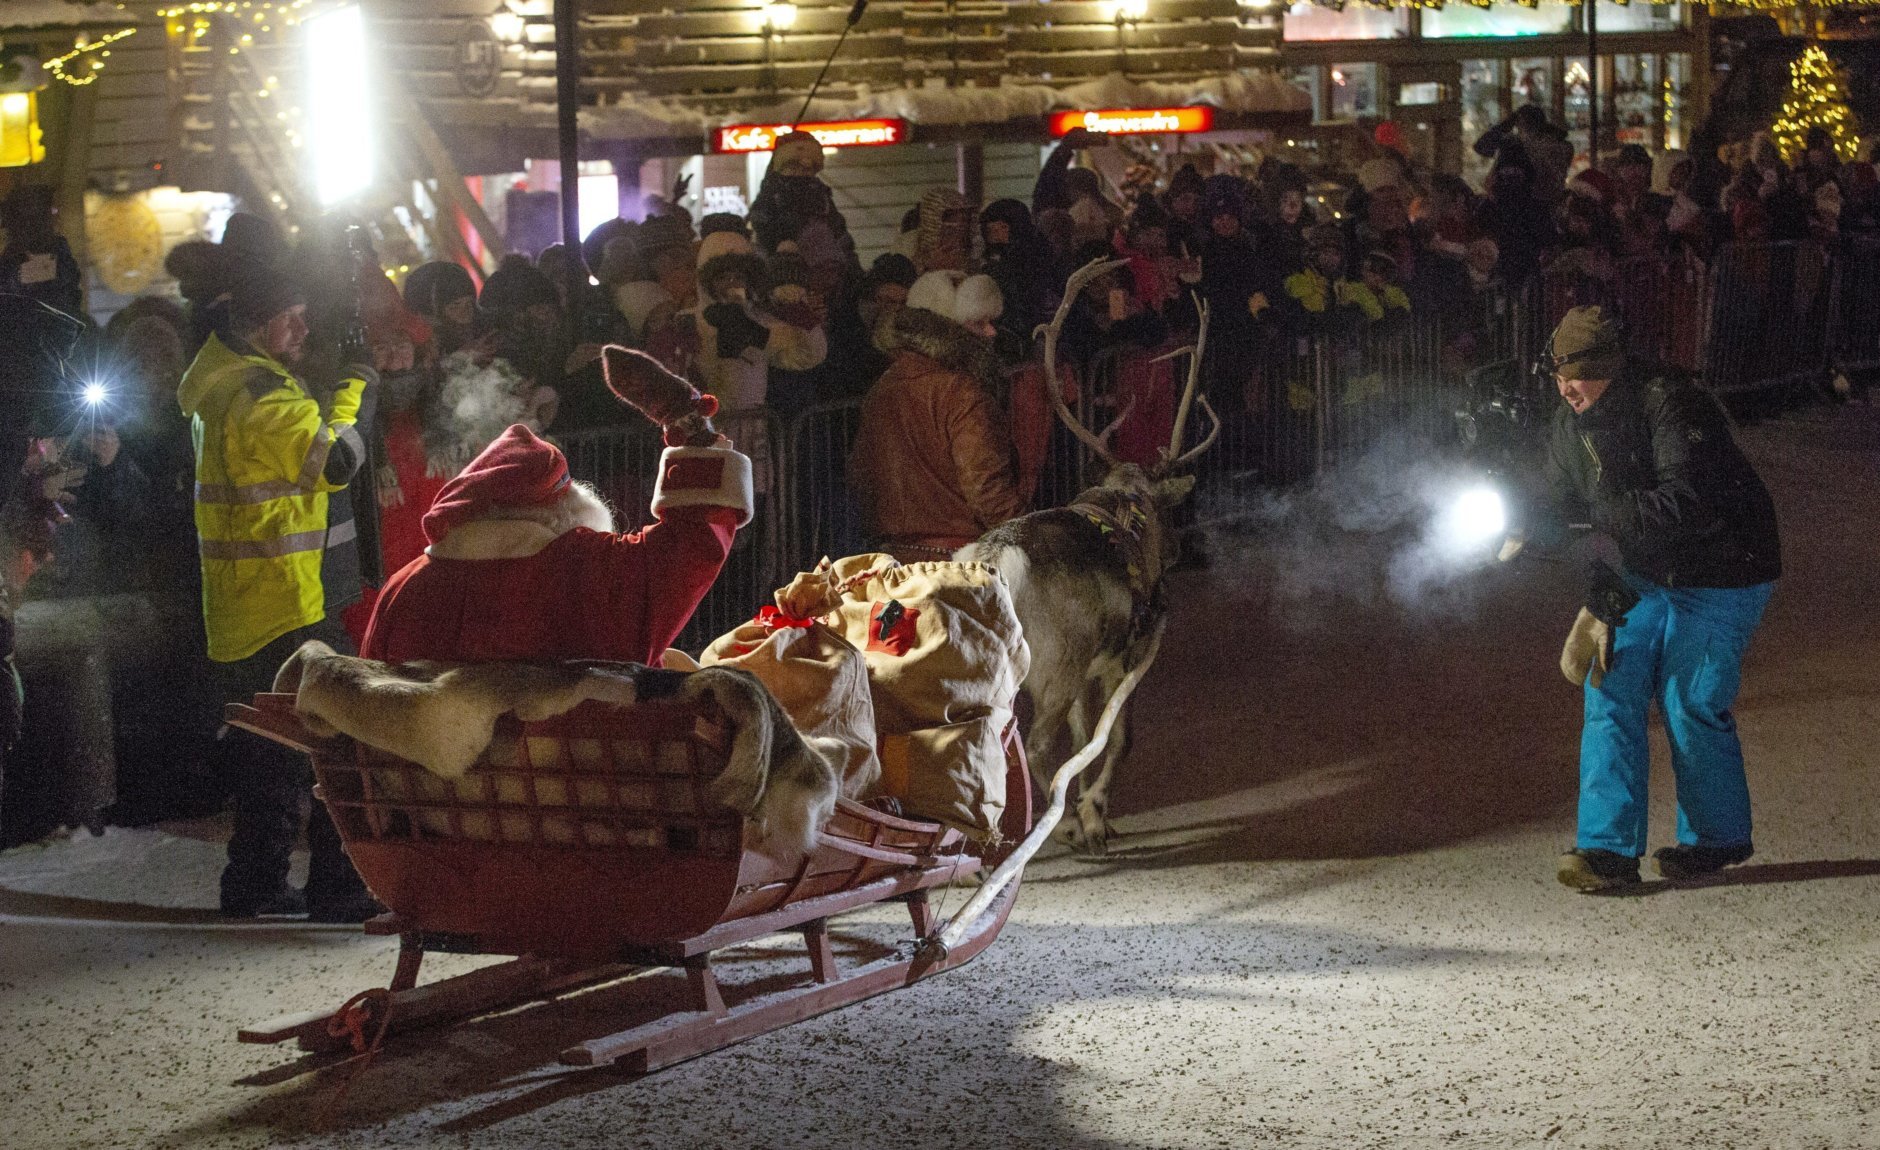 A person dressed up as Santa sits in a slay, as he leaves Santa's Village at the Arctic Circle, Rovaniemi, Finnish Lapland, Sunday, Dec. 23, 2018. (Laura Haapam'ki/Lehtikuva via AP)